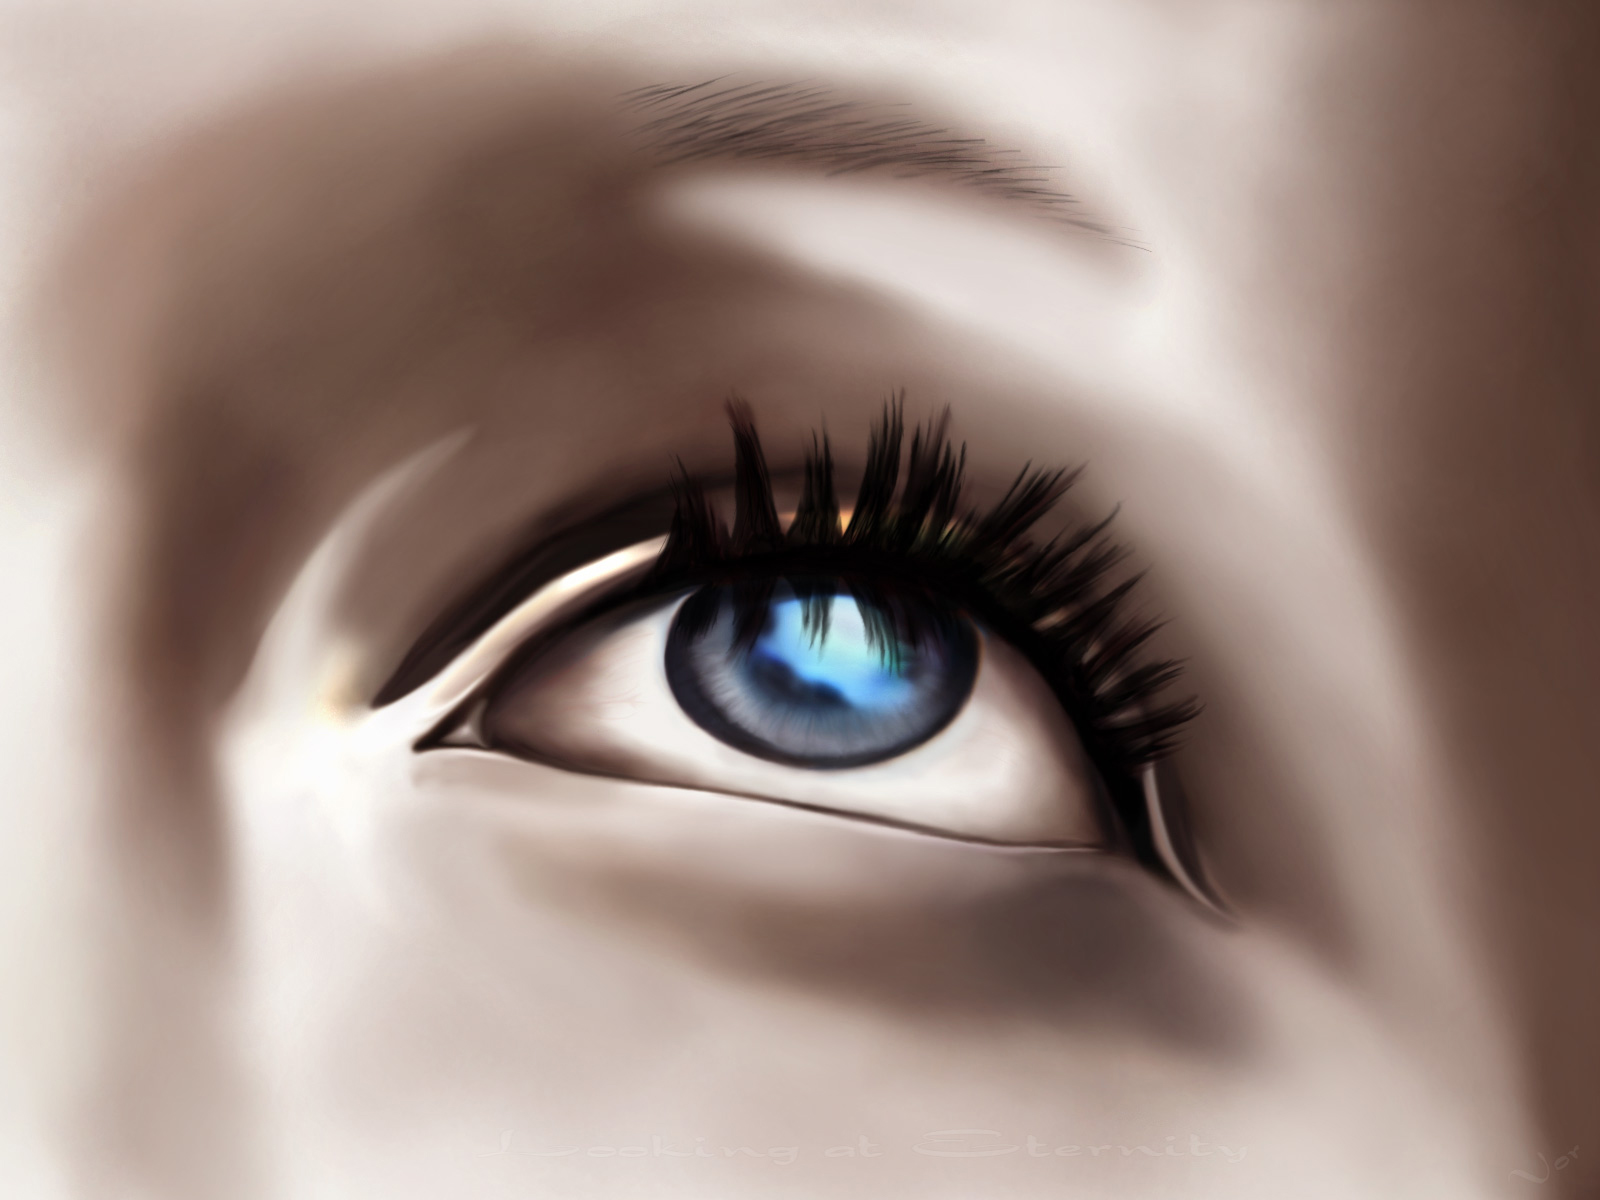 sad eyes wallpaper,eyelash,face,eye,eyebrow,blue